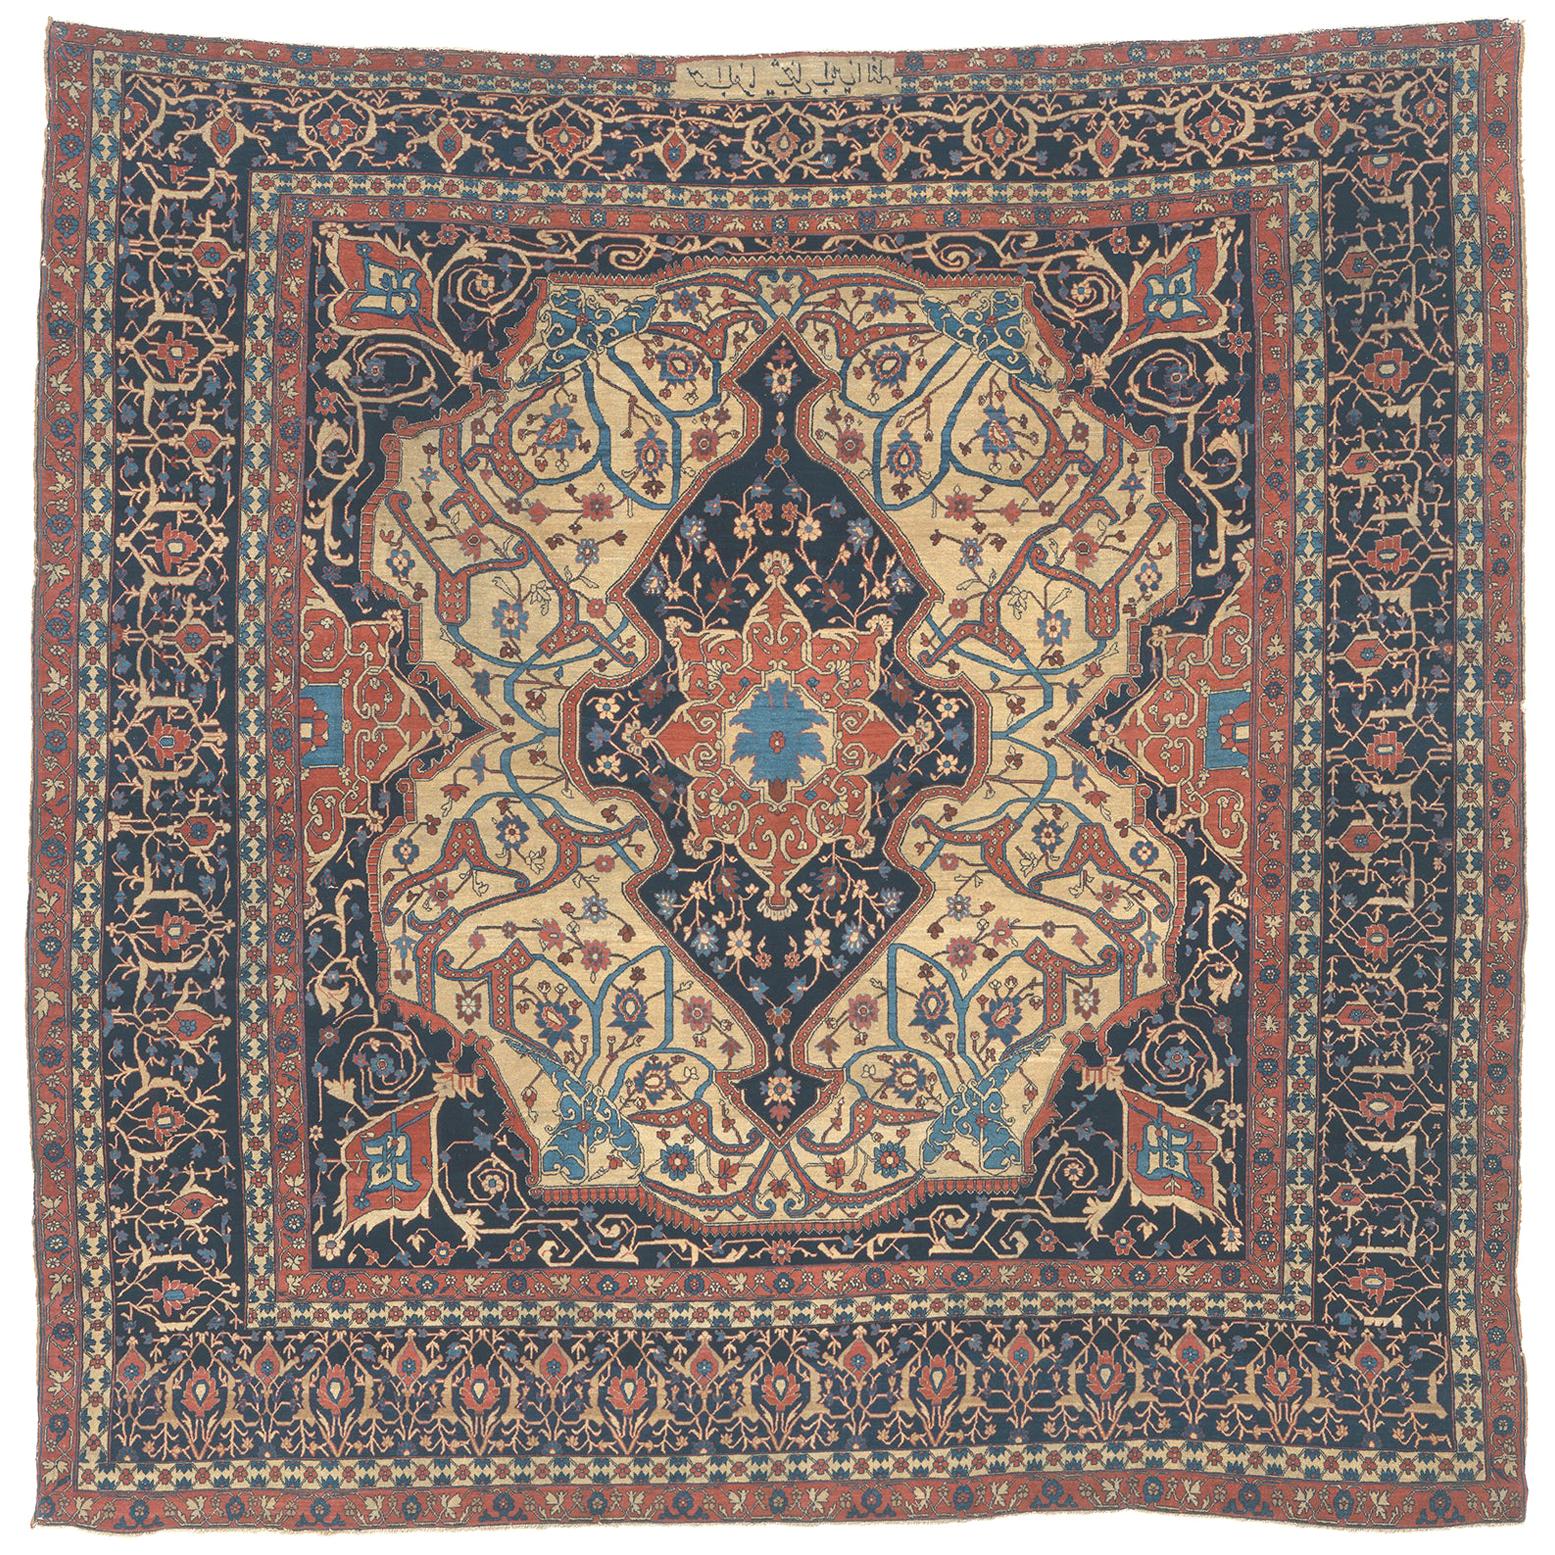 Early 19th Century Persian Heriz Rug